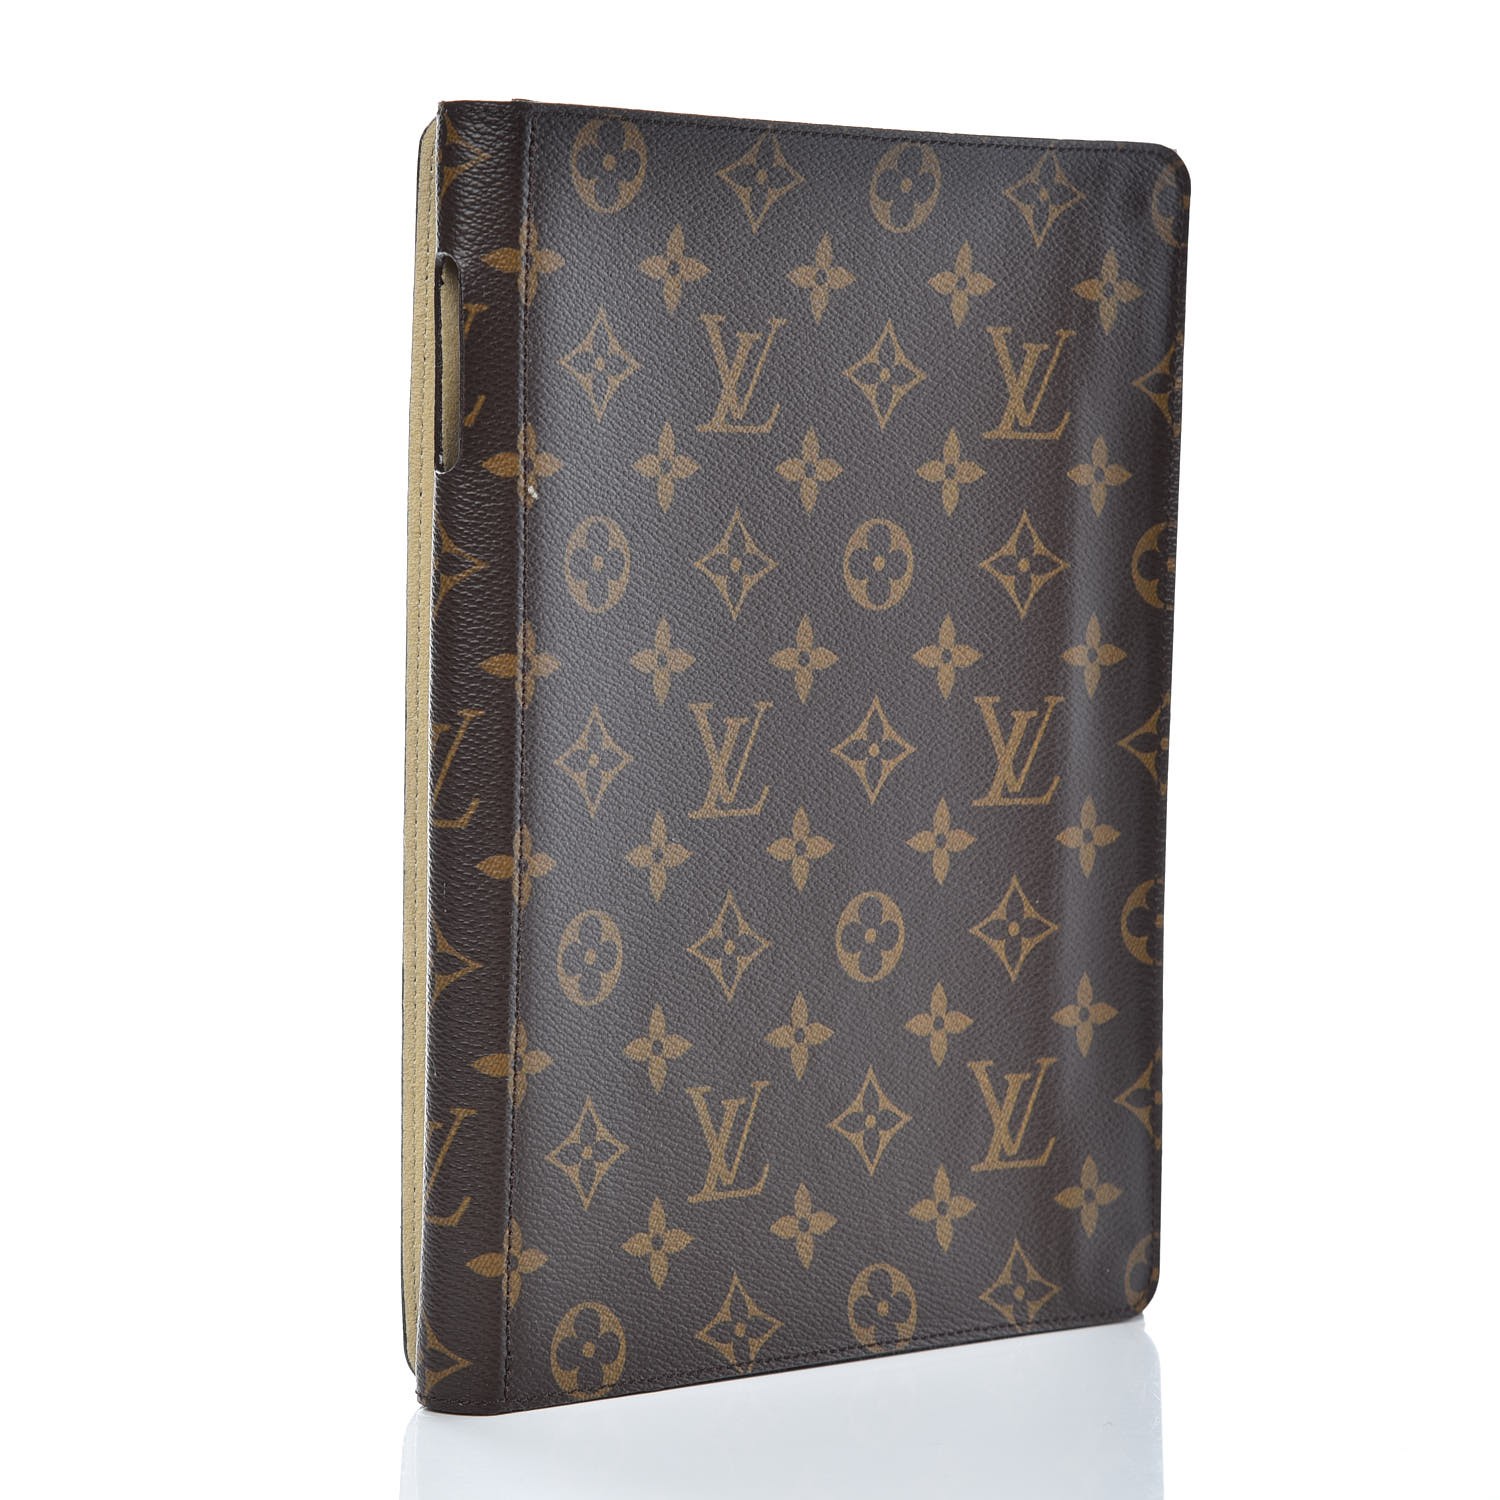 Classic Red Louis Vuitton Monogram x Supreme Logo iPad mini 4 Case